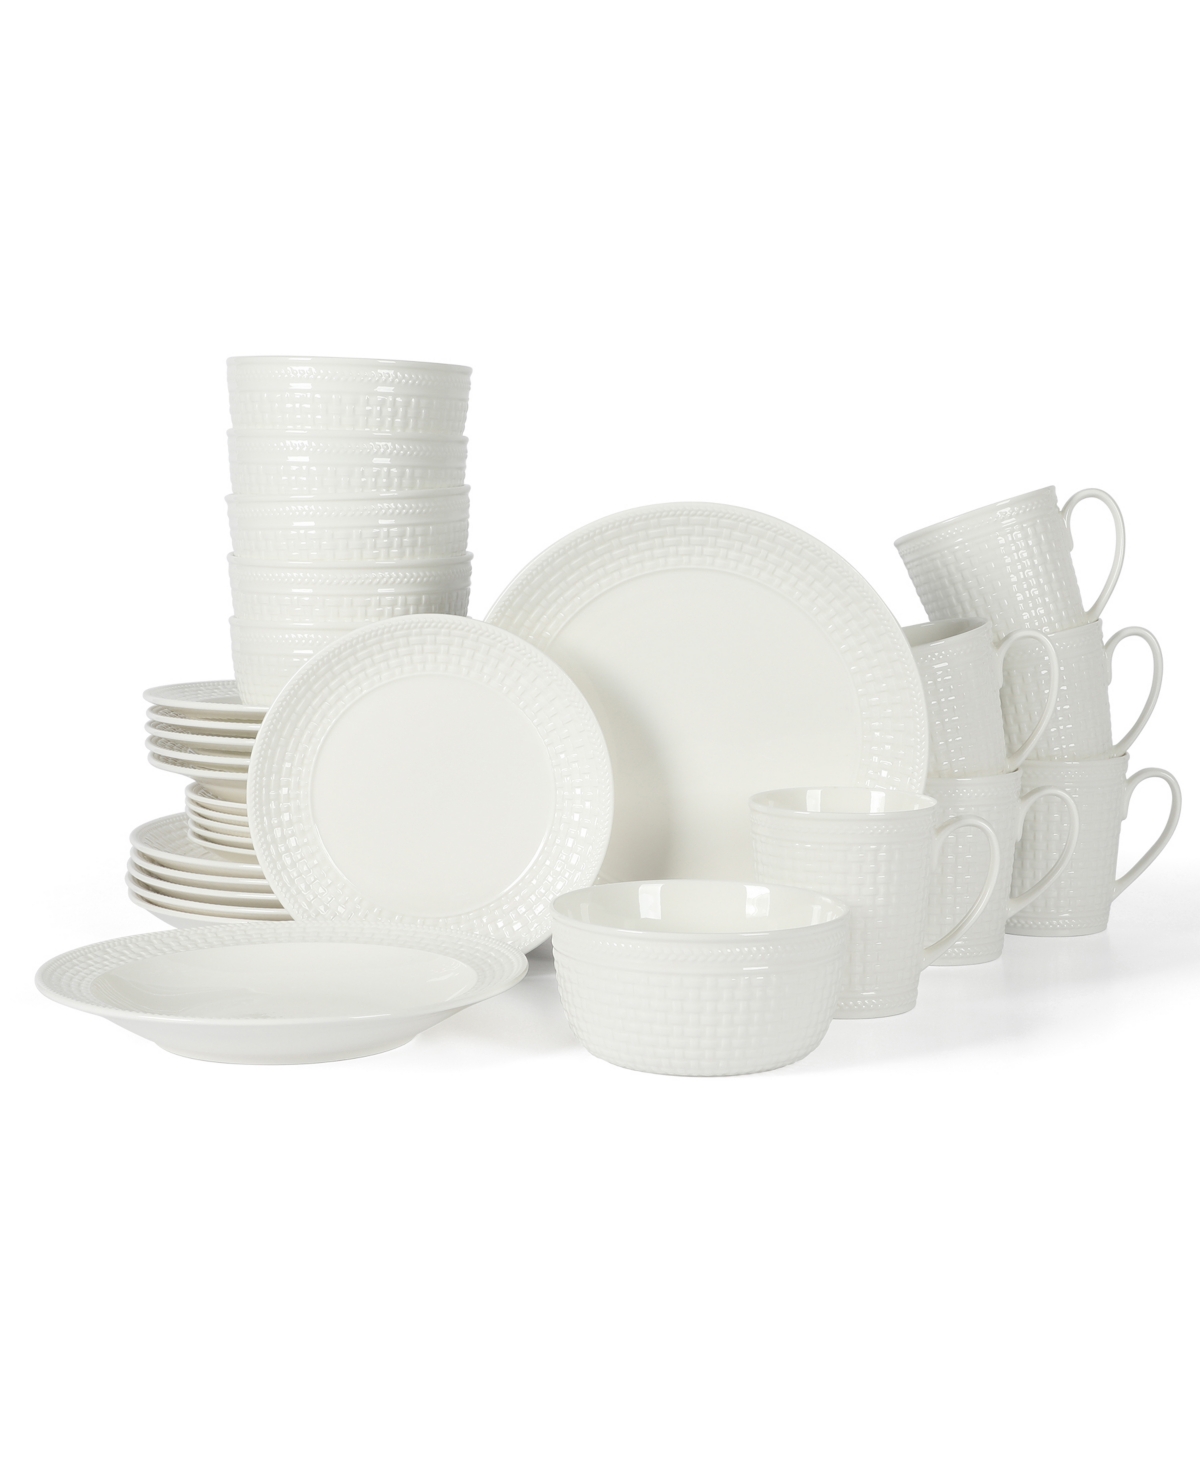 Basket Weave 30 Piece Dinnerware Set, Service for 6 - White